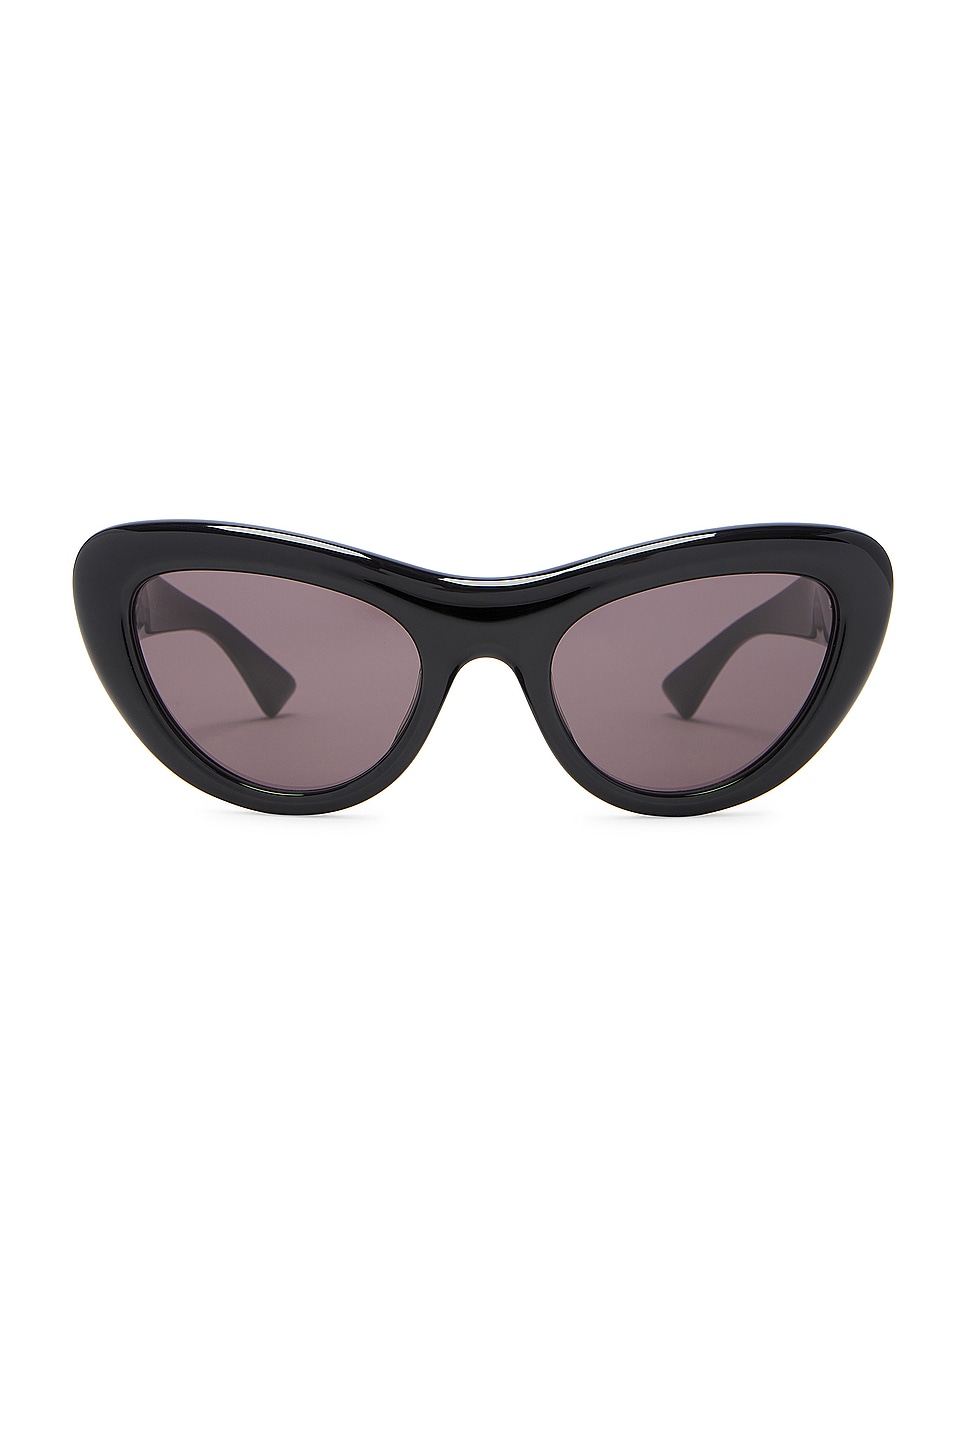 Bottega Veneta Curvy Cat Eye Sunglasses in Black